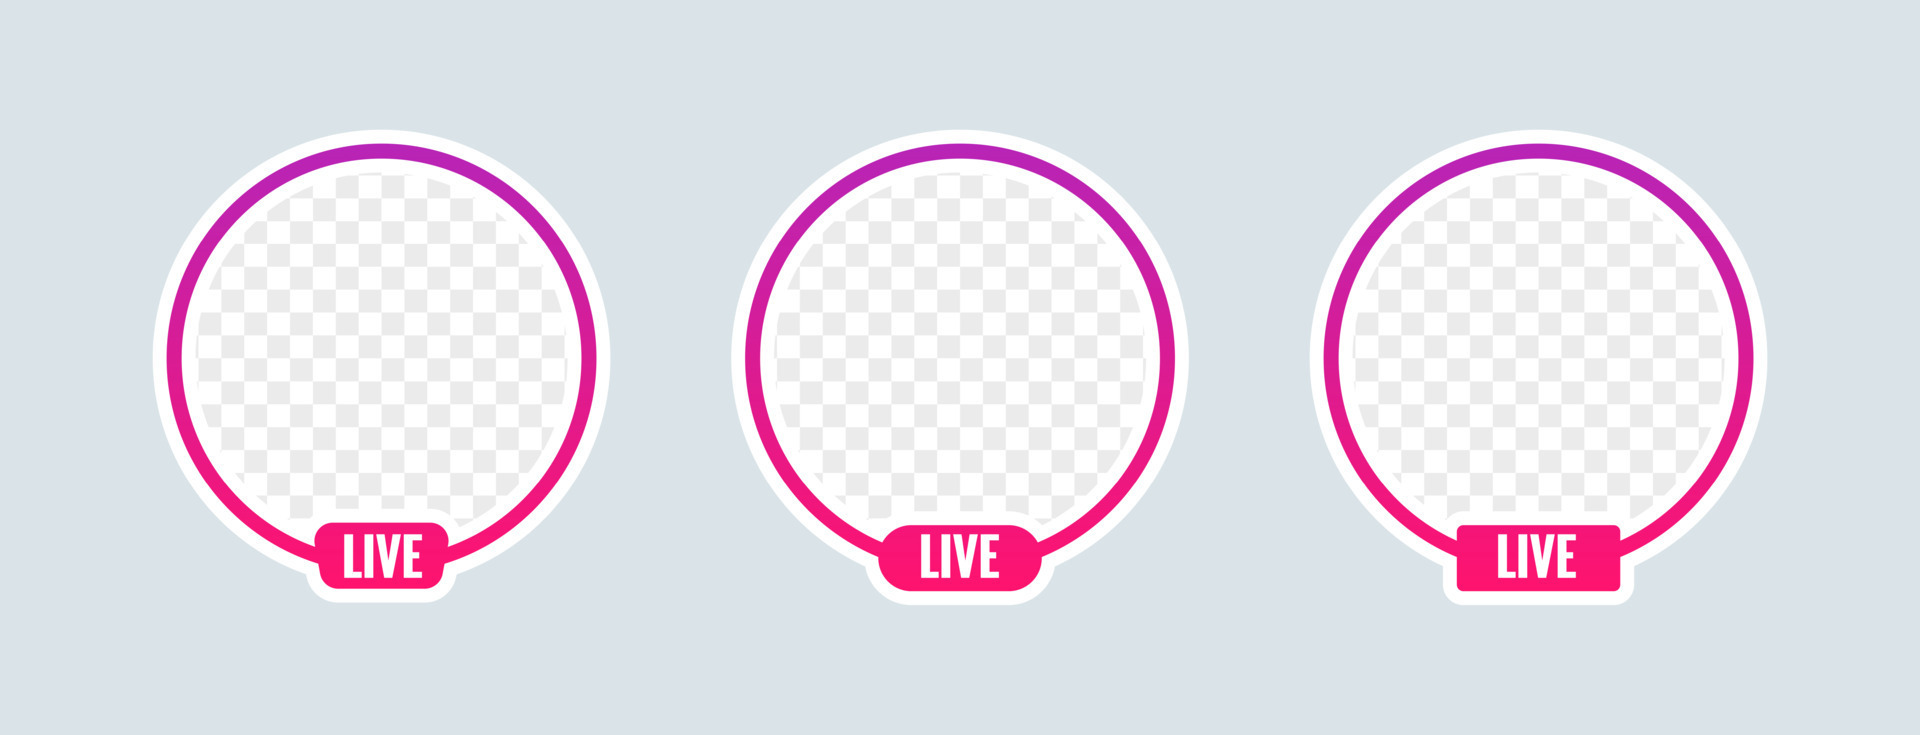 Round profile frame for live streaming on social media